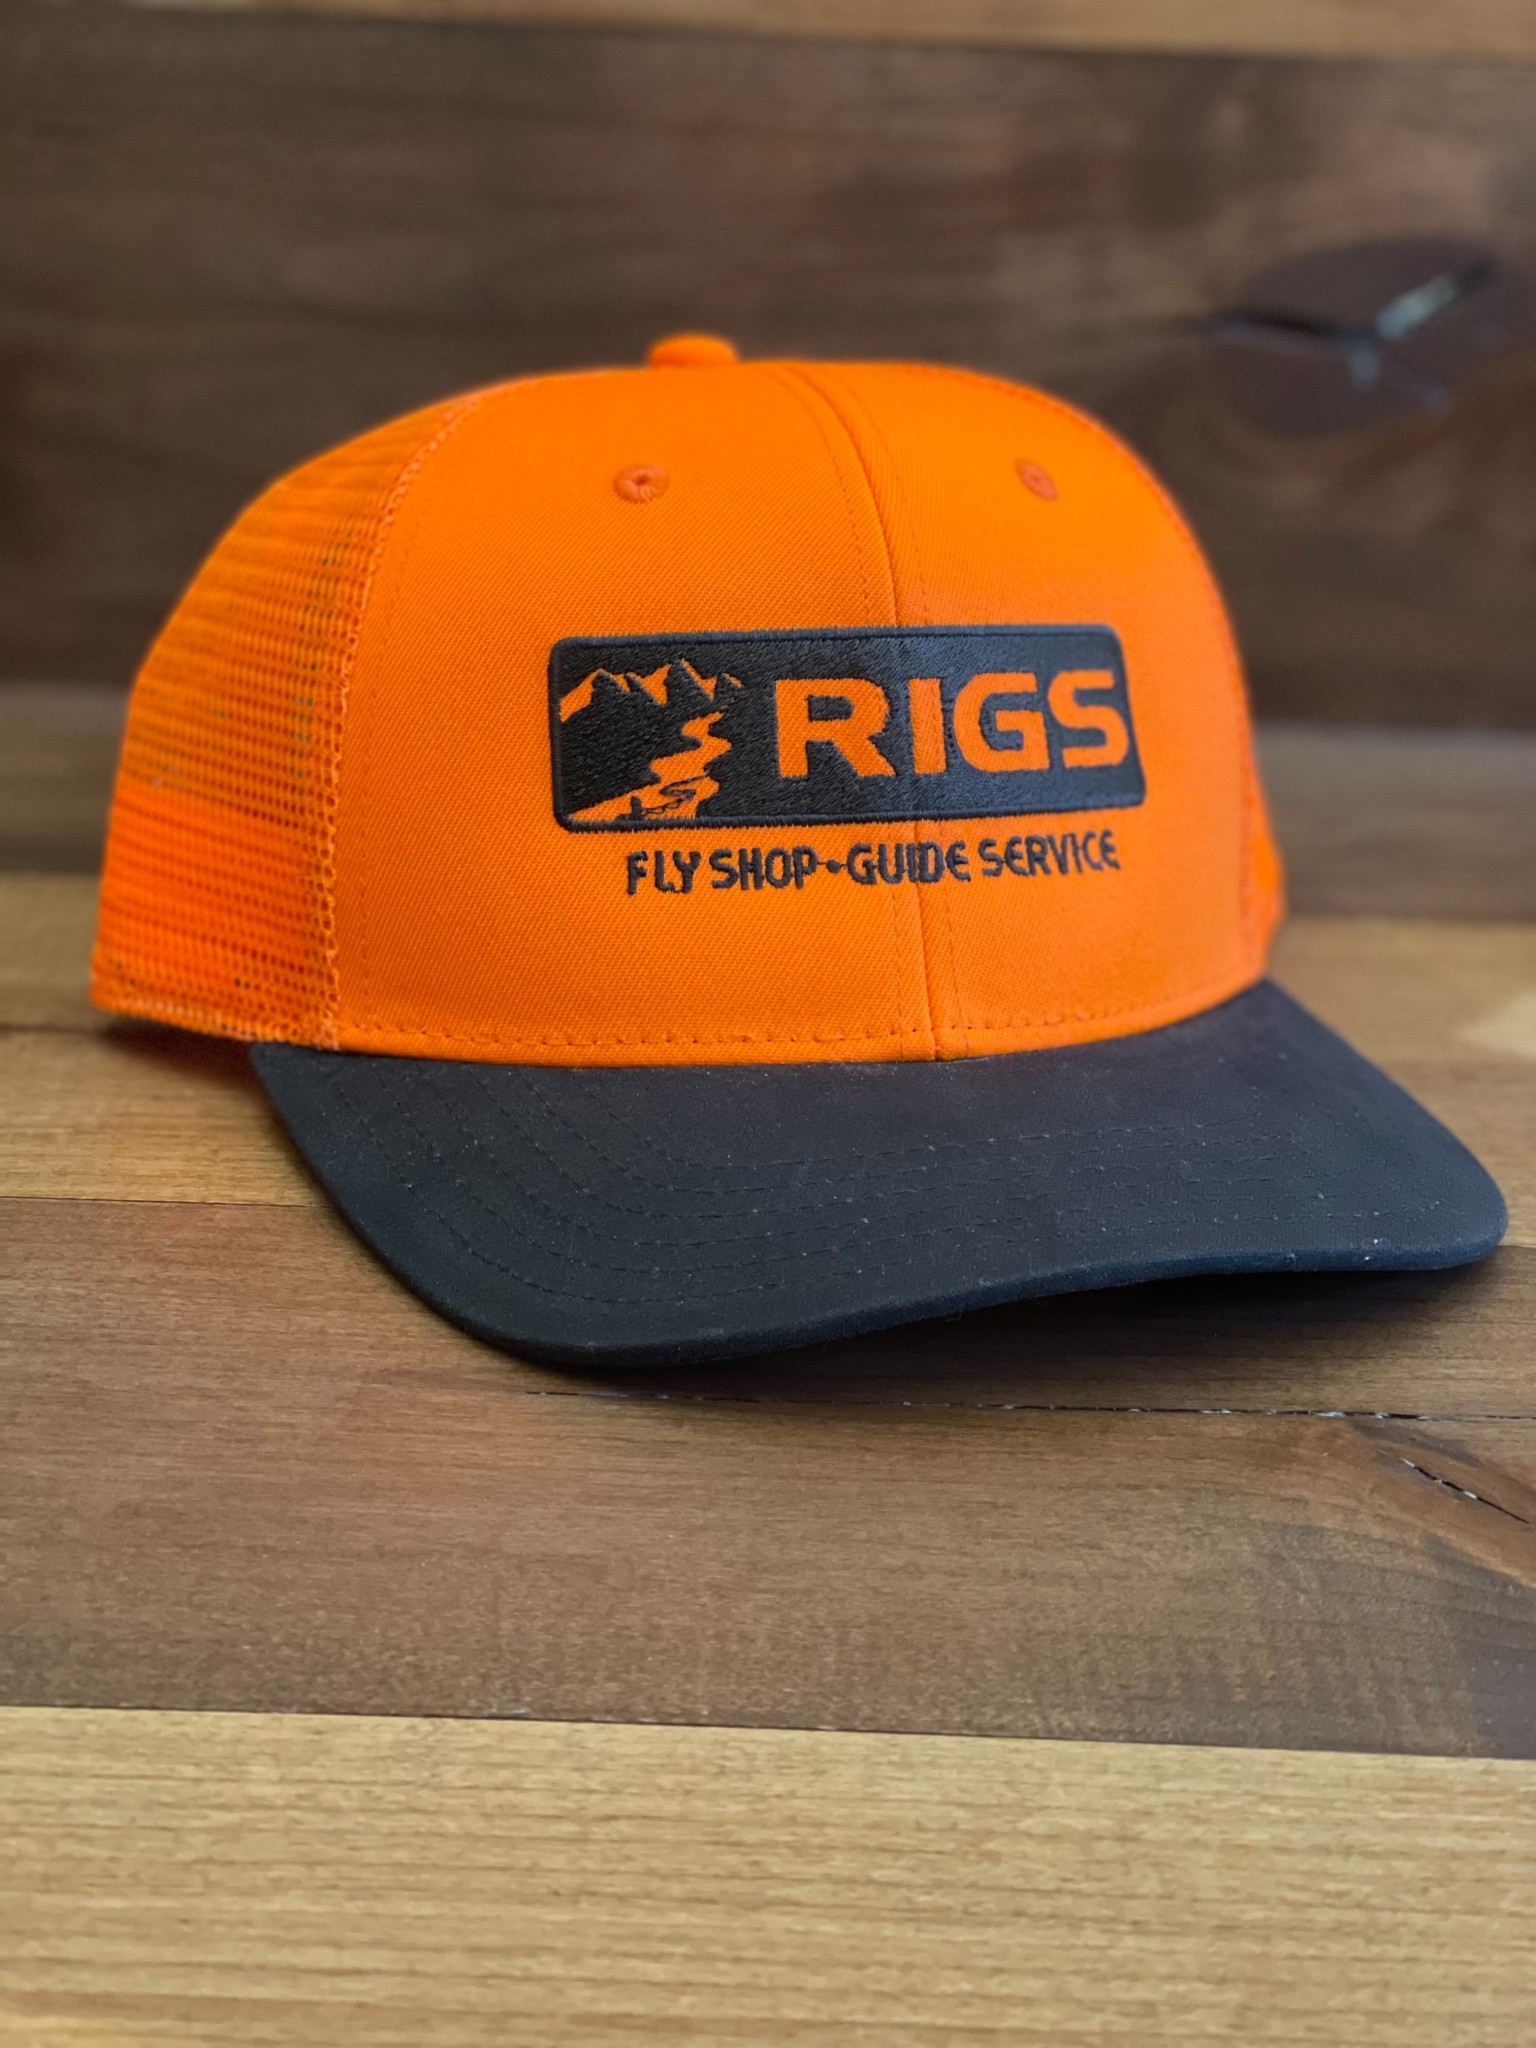 RIGS Logo Orvis Blaze Orange and Wax Cap - RIGS Fly Shop